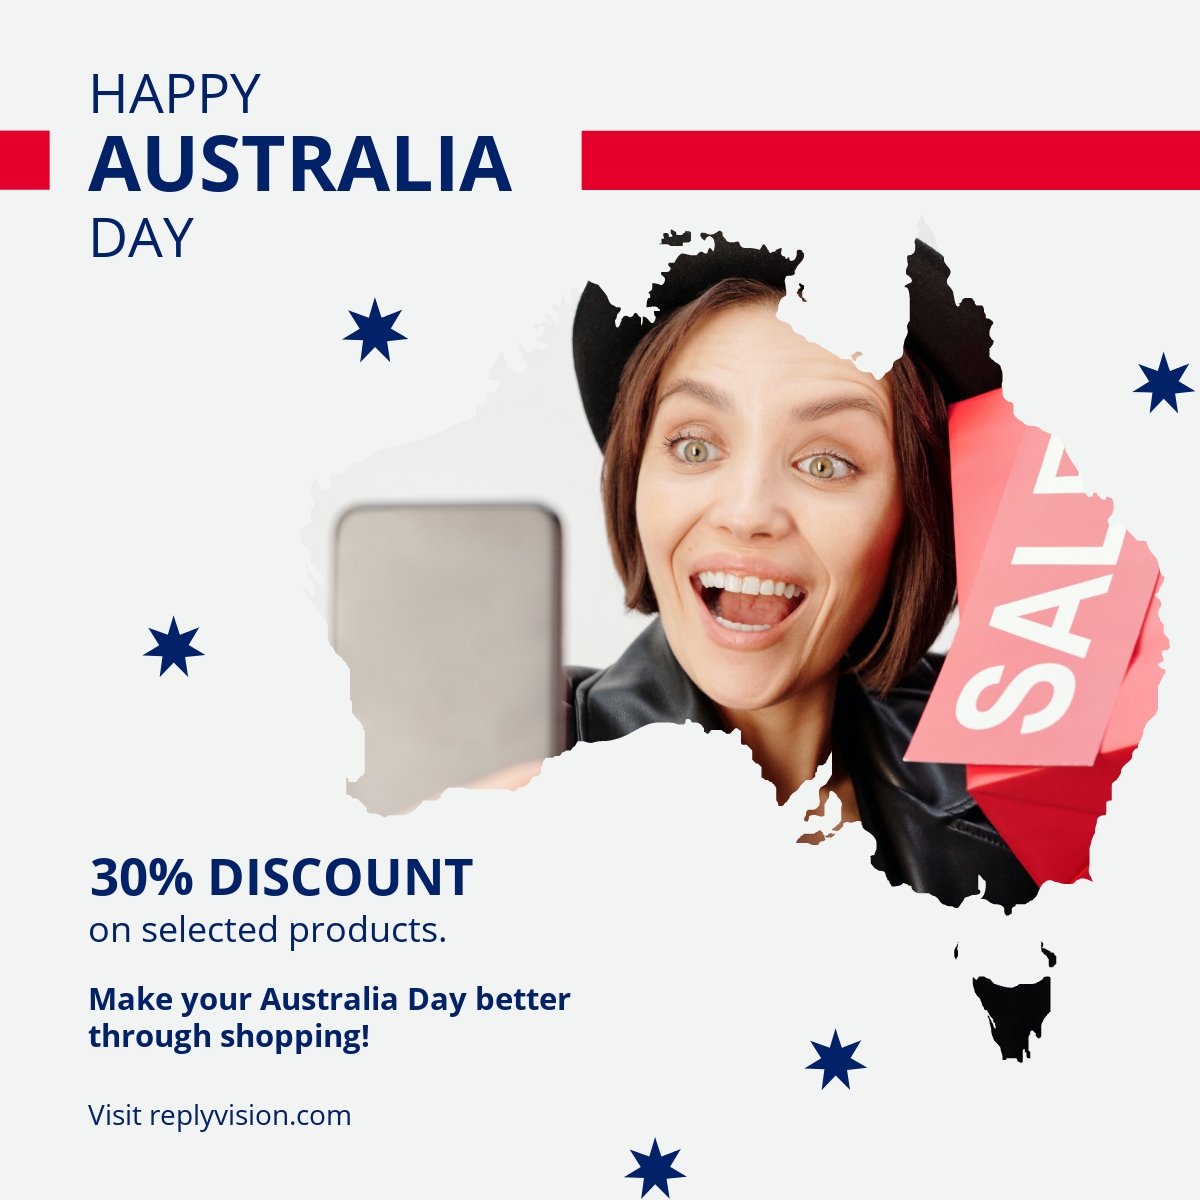 Happy Australia Day Linkedin Post.jpe